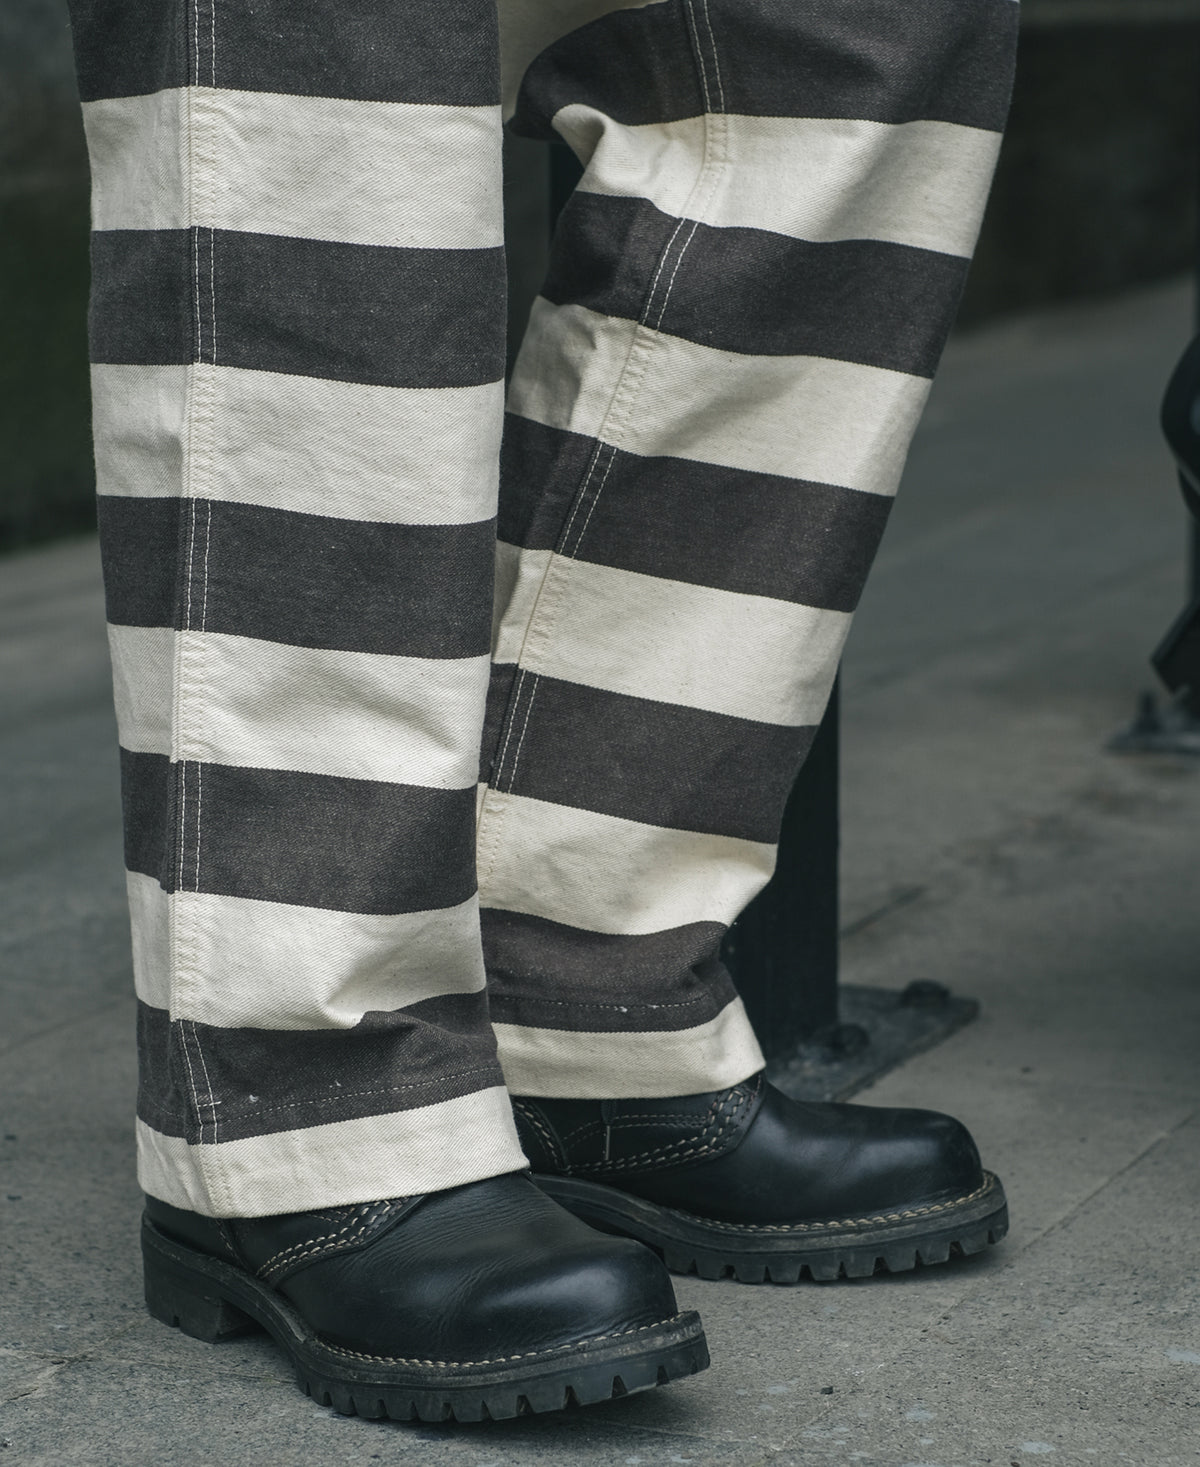 Heavyweight Wide Striped Prisoner Pants